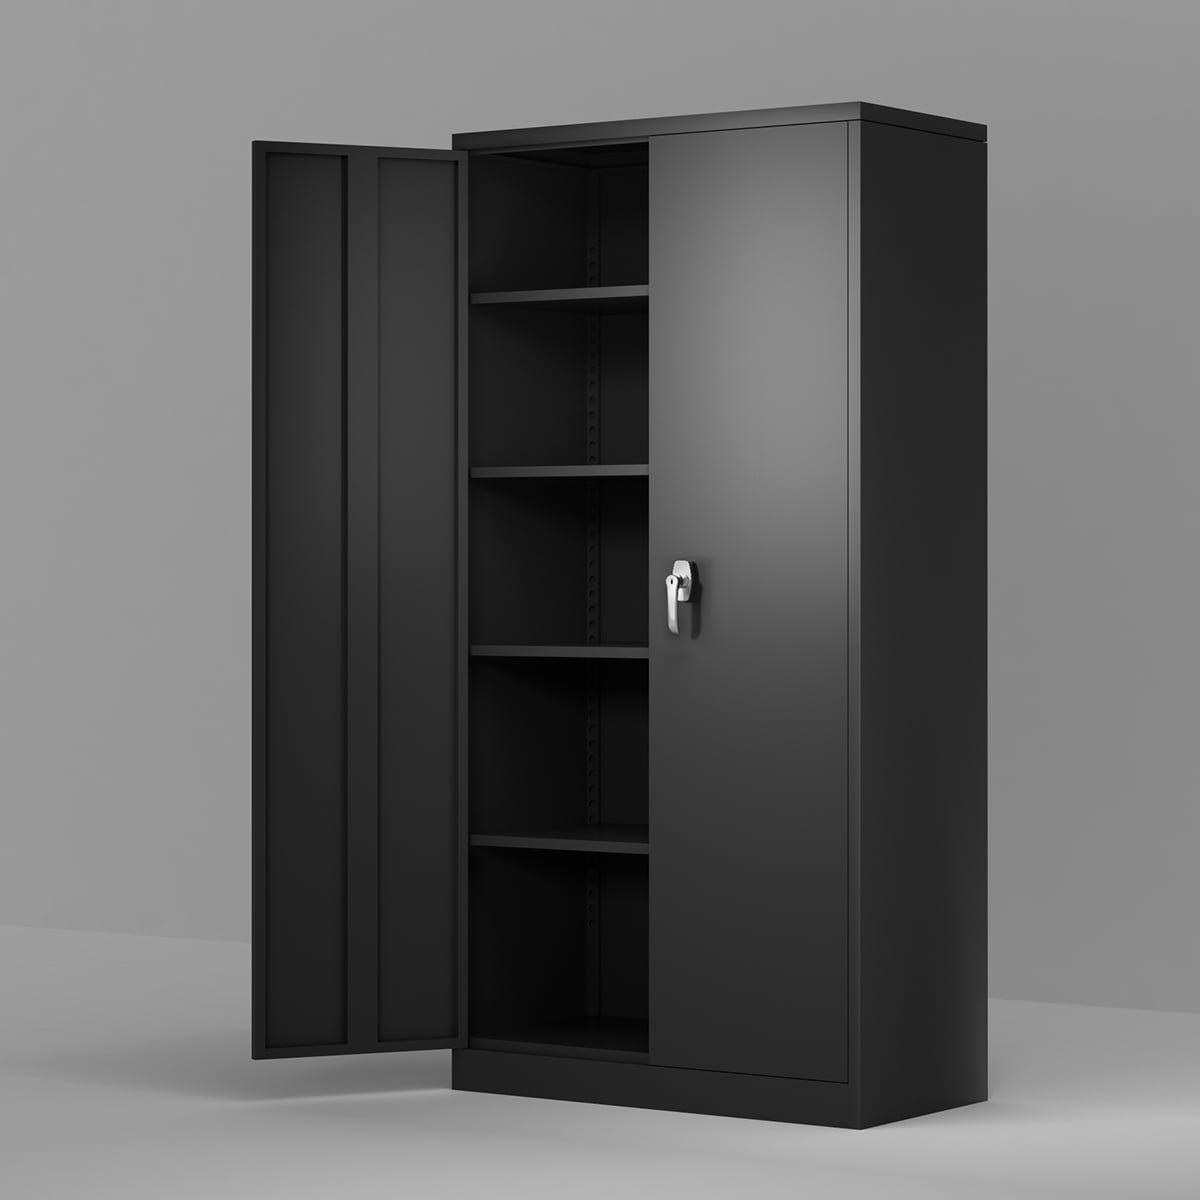 Details about   Adjustable Space Saving Kitchen Storage Rack Metal Cupboard Storage Shelf 